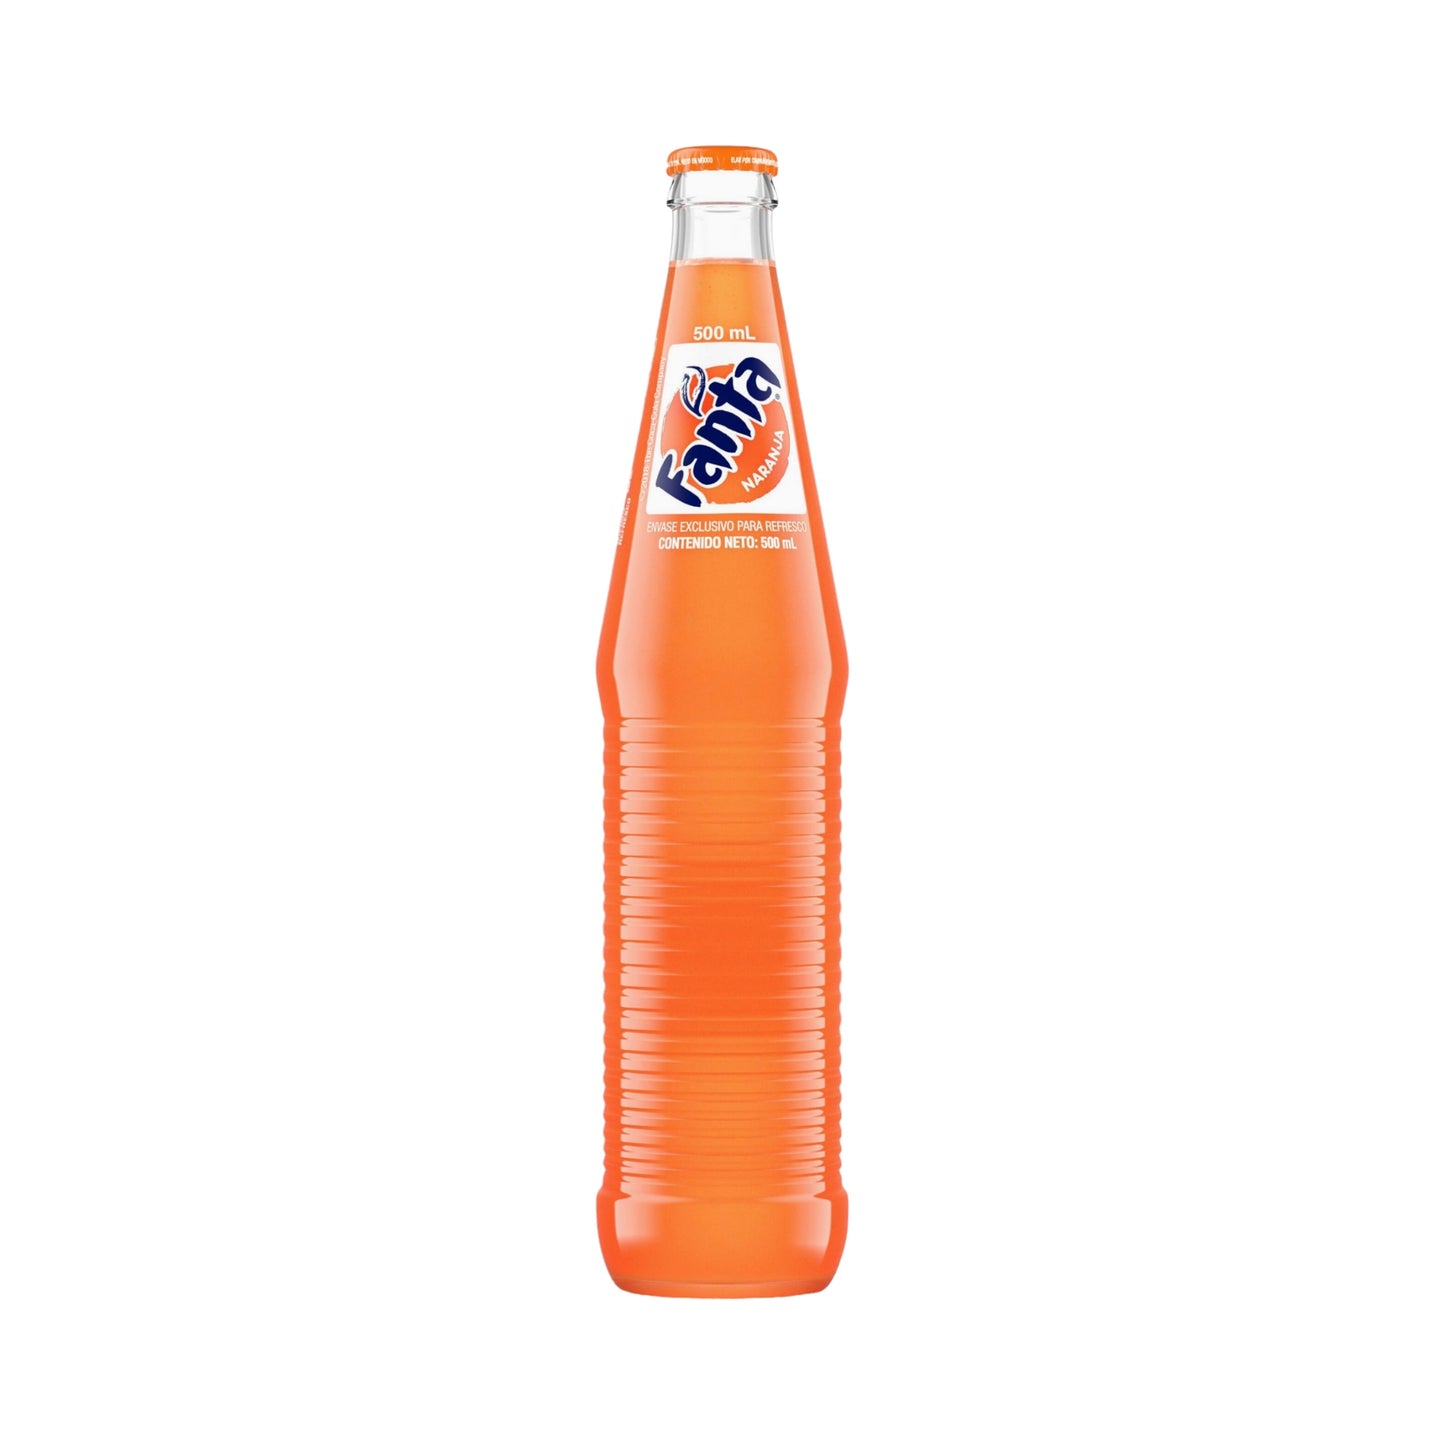 Mexican Fanta Orange Soda - 500ml